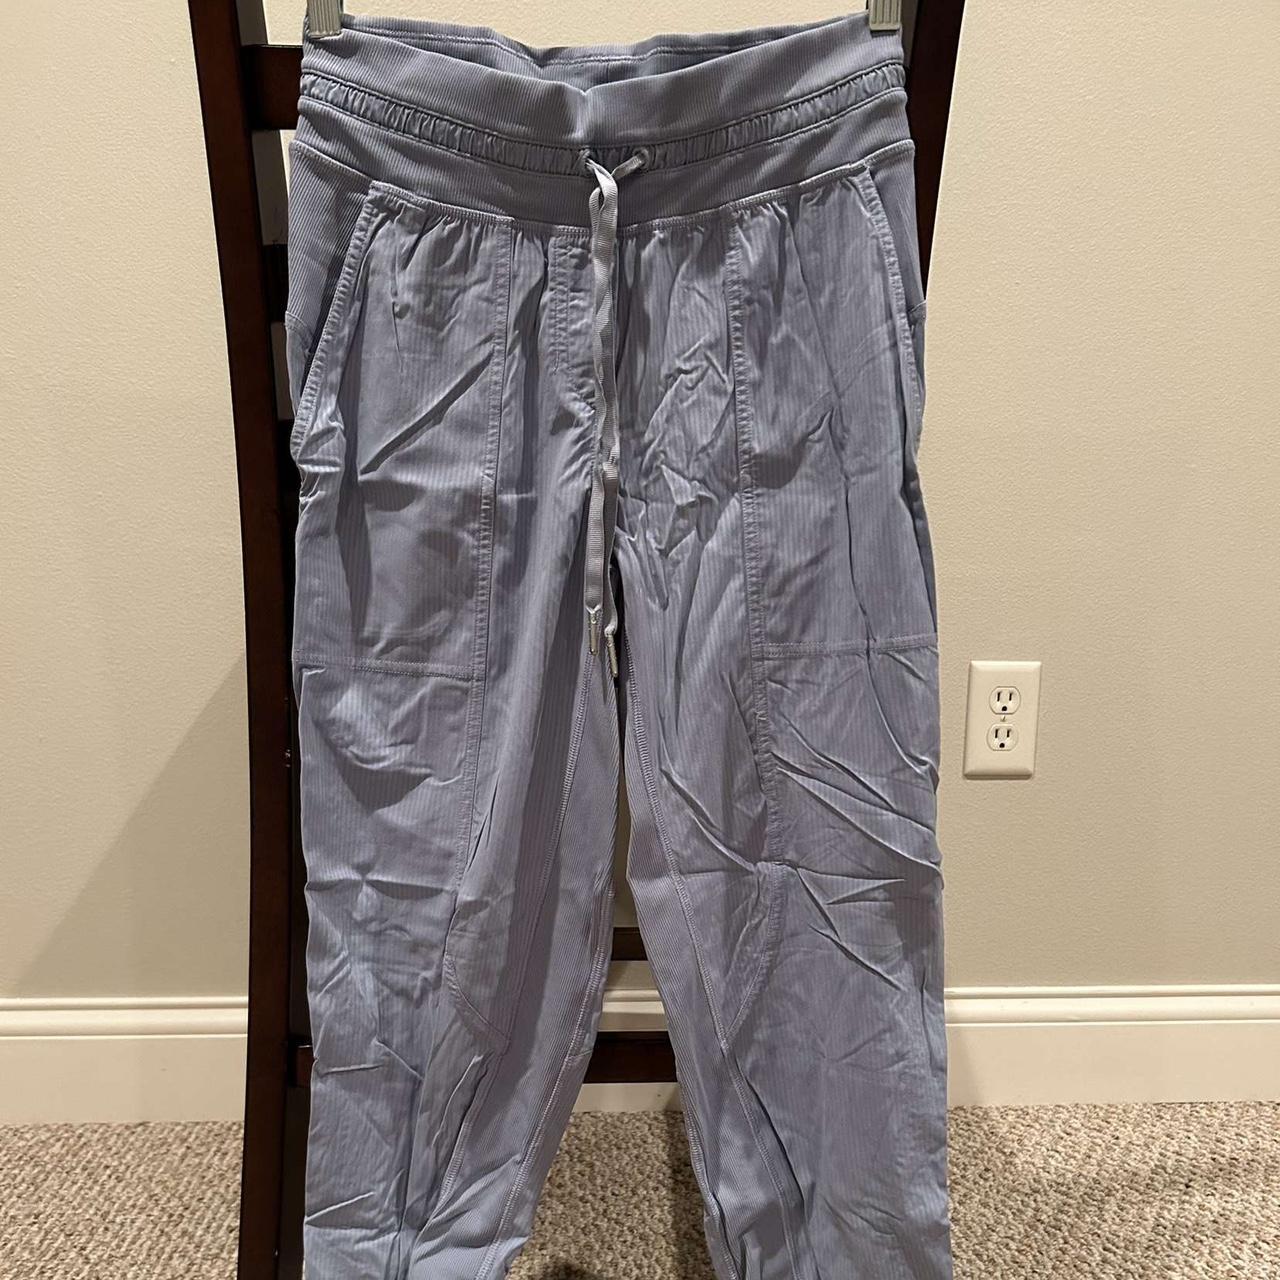 lululemon dance studio pants cropped true navy size - Depop